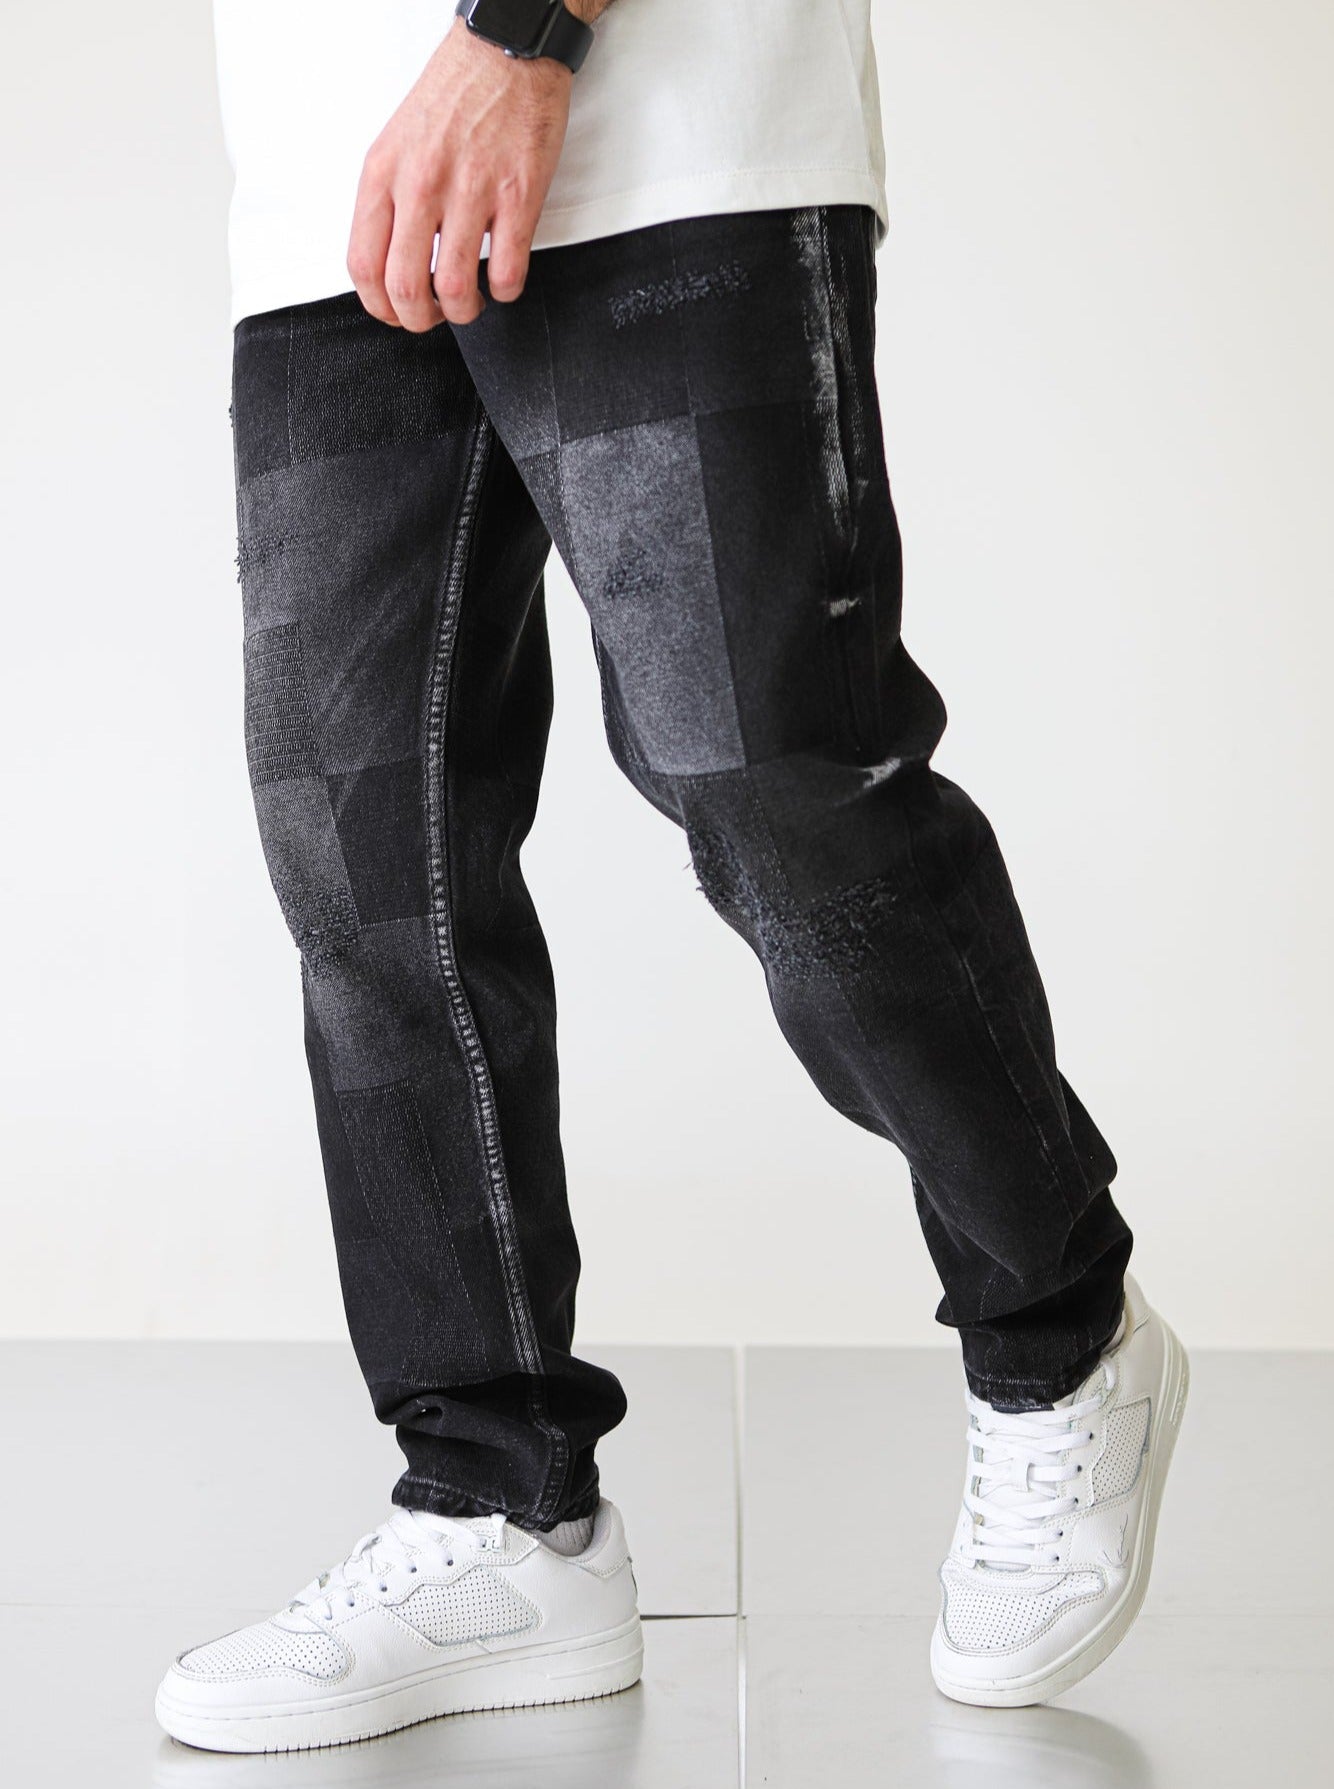 Premium Wide Fit Patterned Black Jeans - UNEFFECTED STUDIOS® - JEANS - UNEFFECTED STUDIOS®